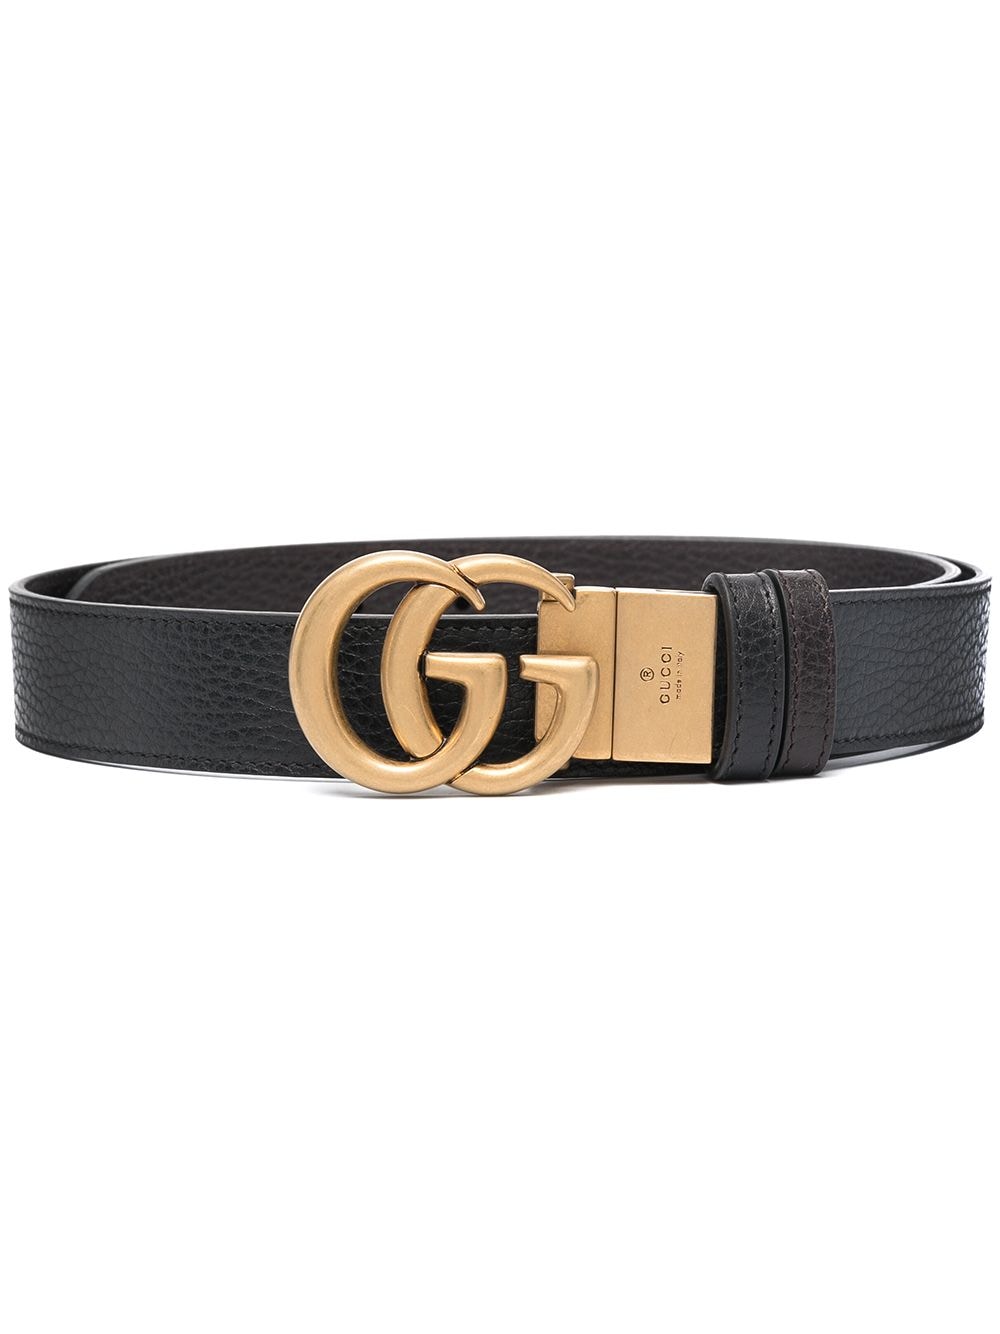 Gucci Double G buckle leather belt - Black von Gucci